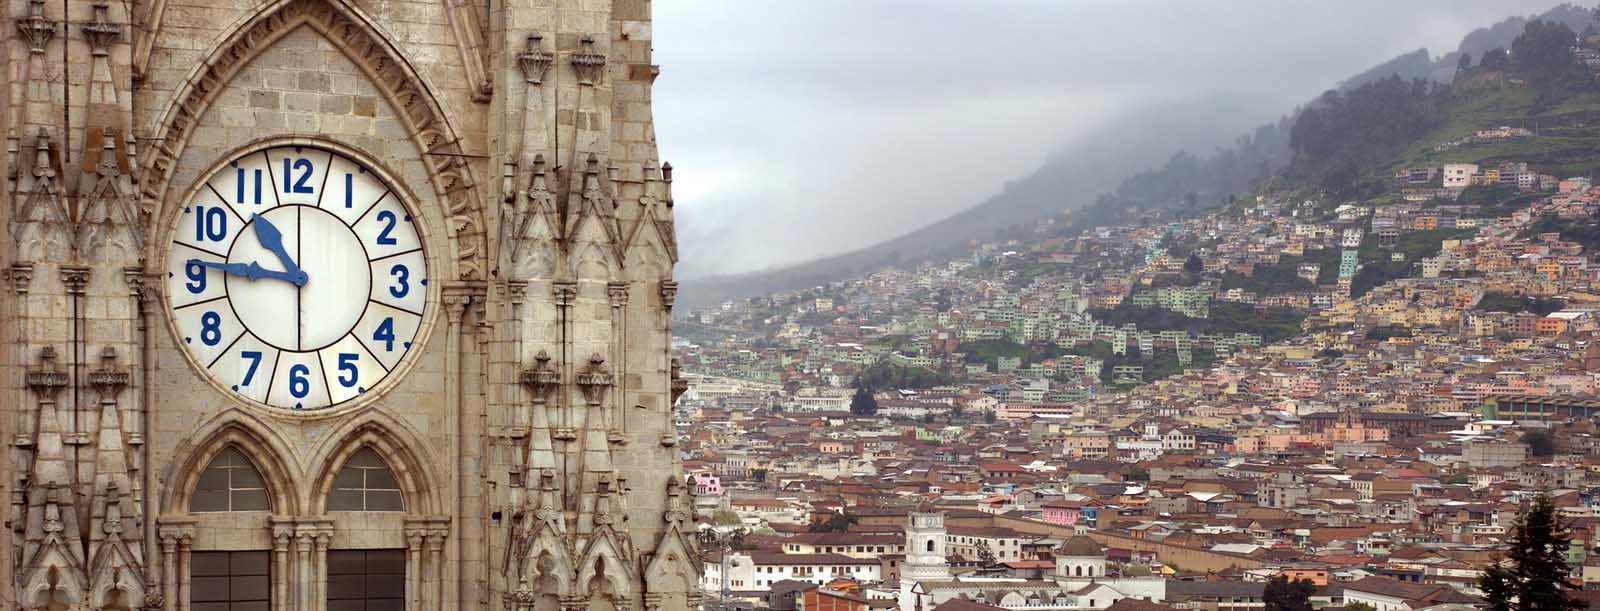 Basilica del Voto Nacional | Quito | Ecuador